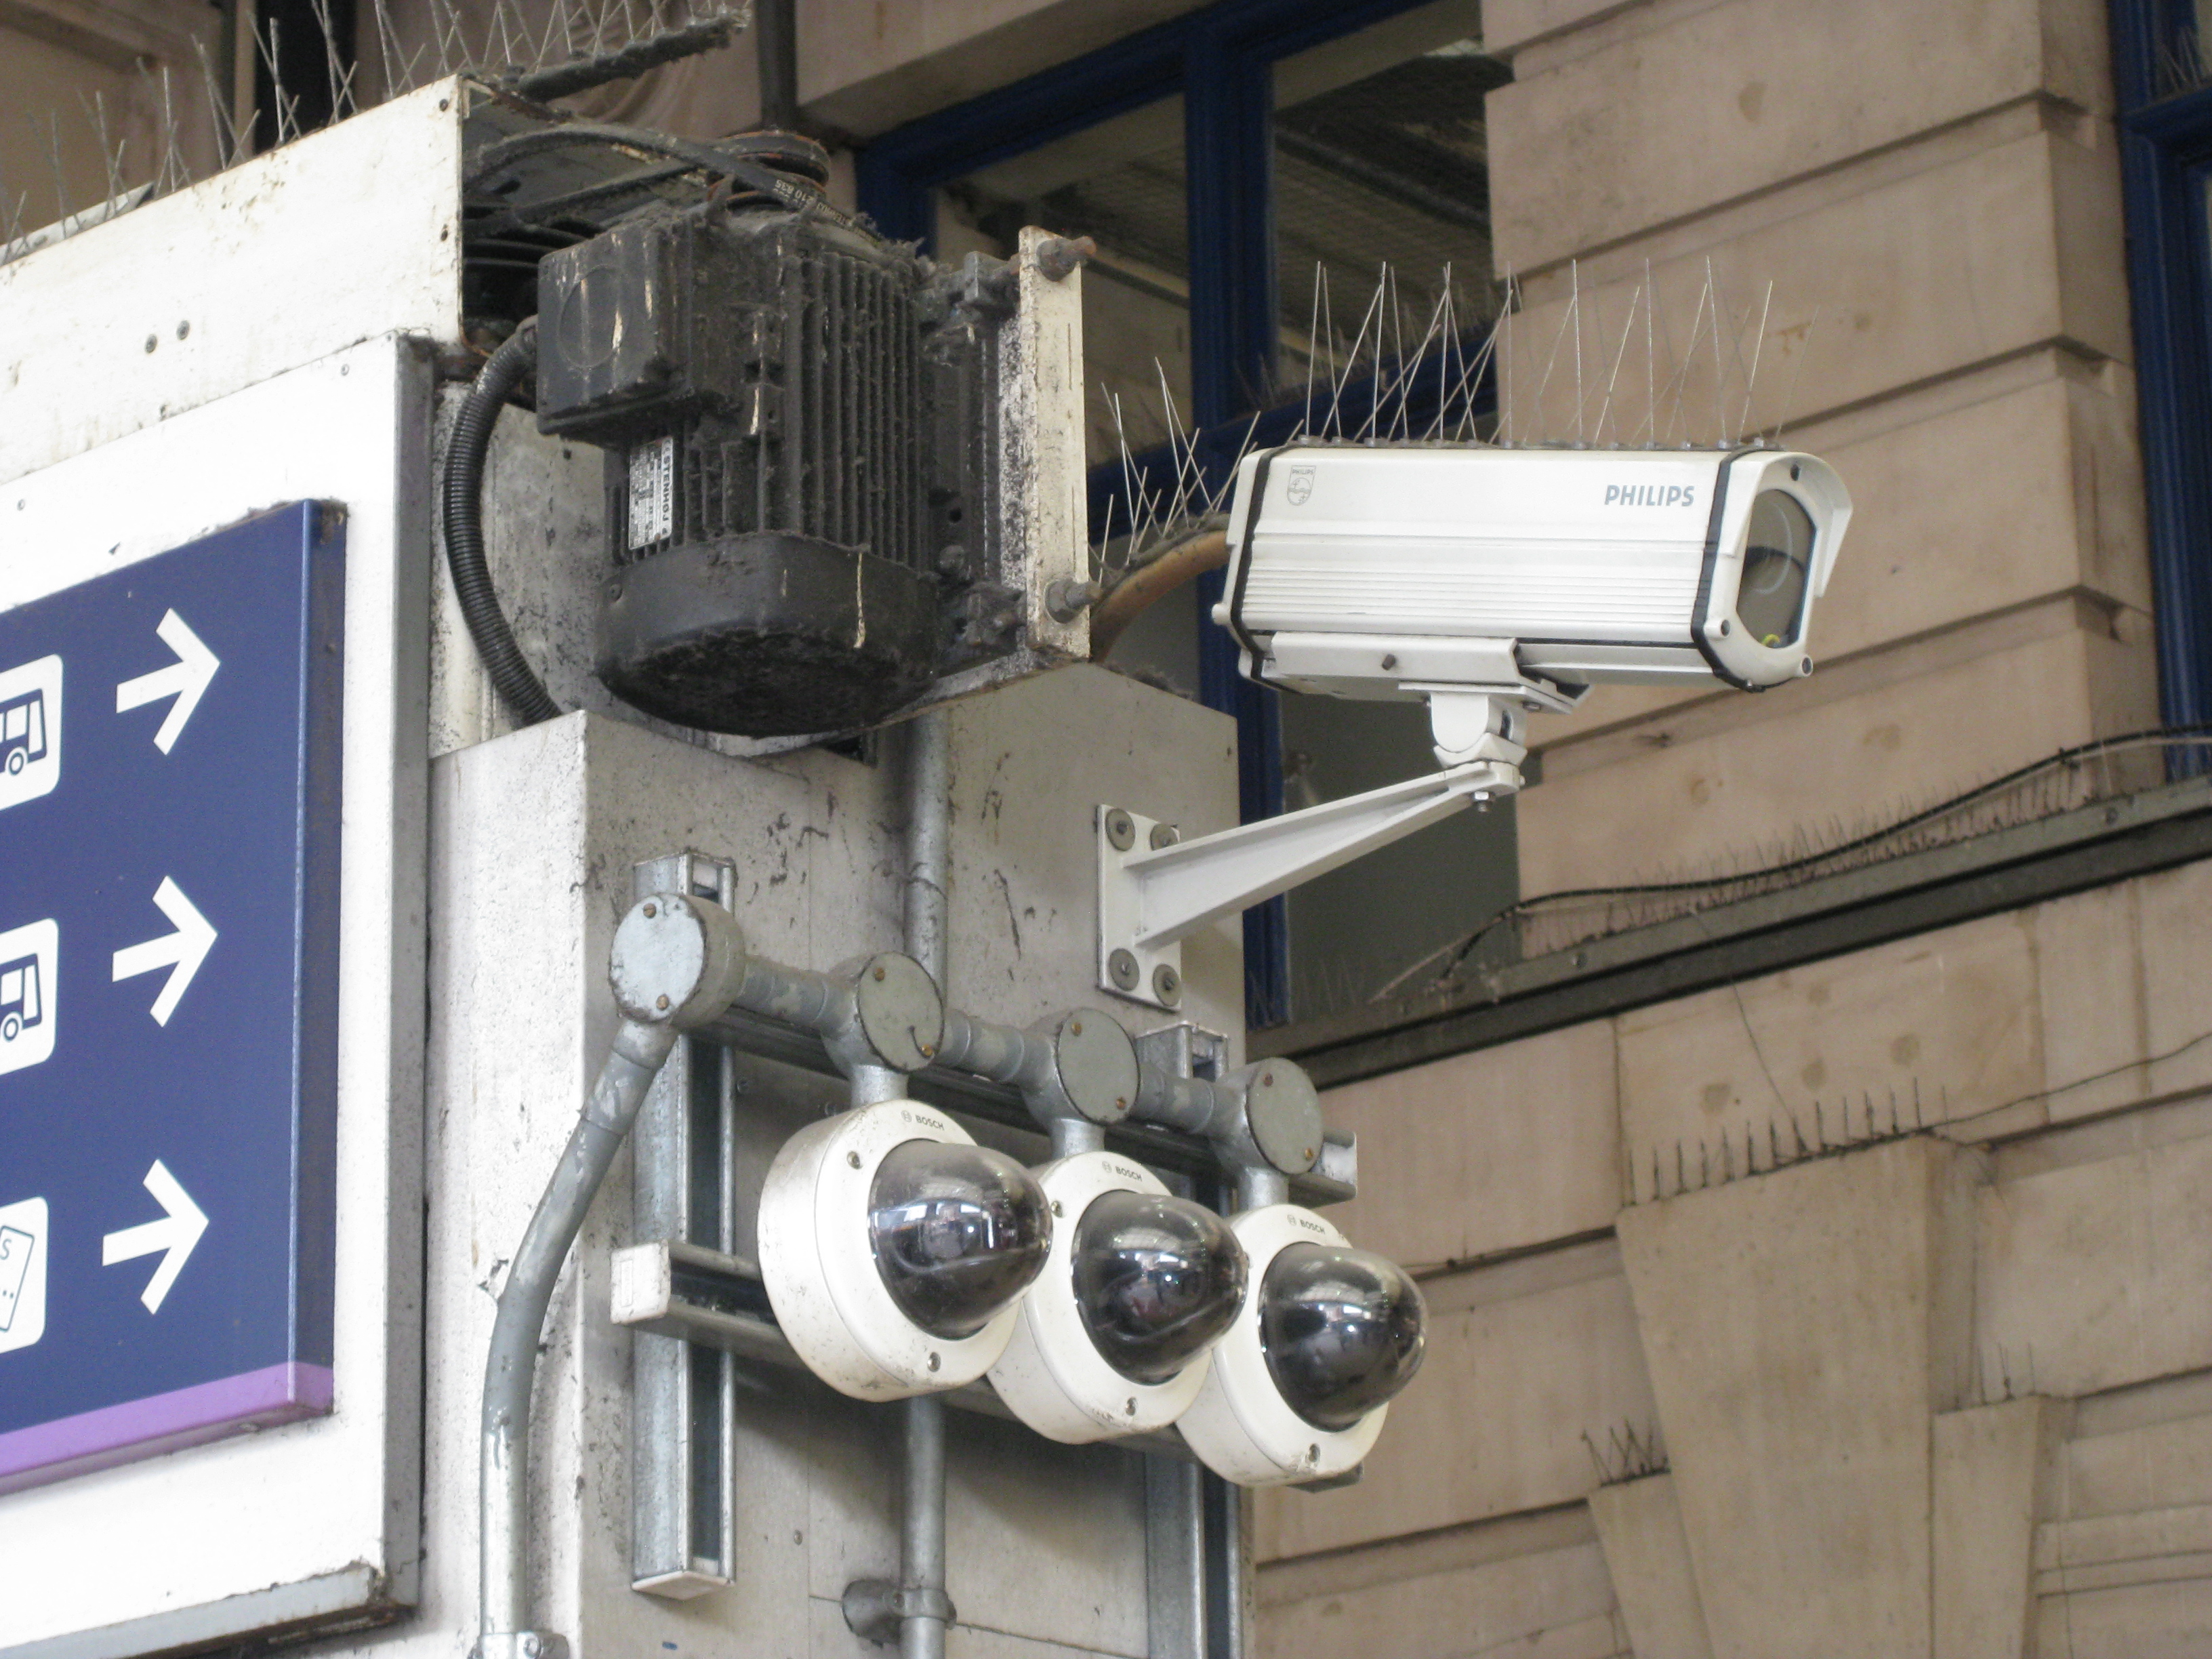 File:CCTV in London 154.jpg - Wikimedia Commons